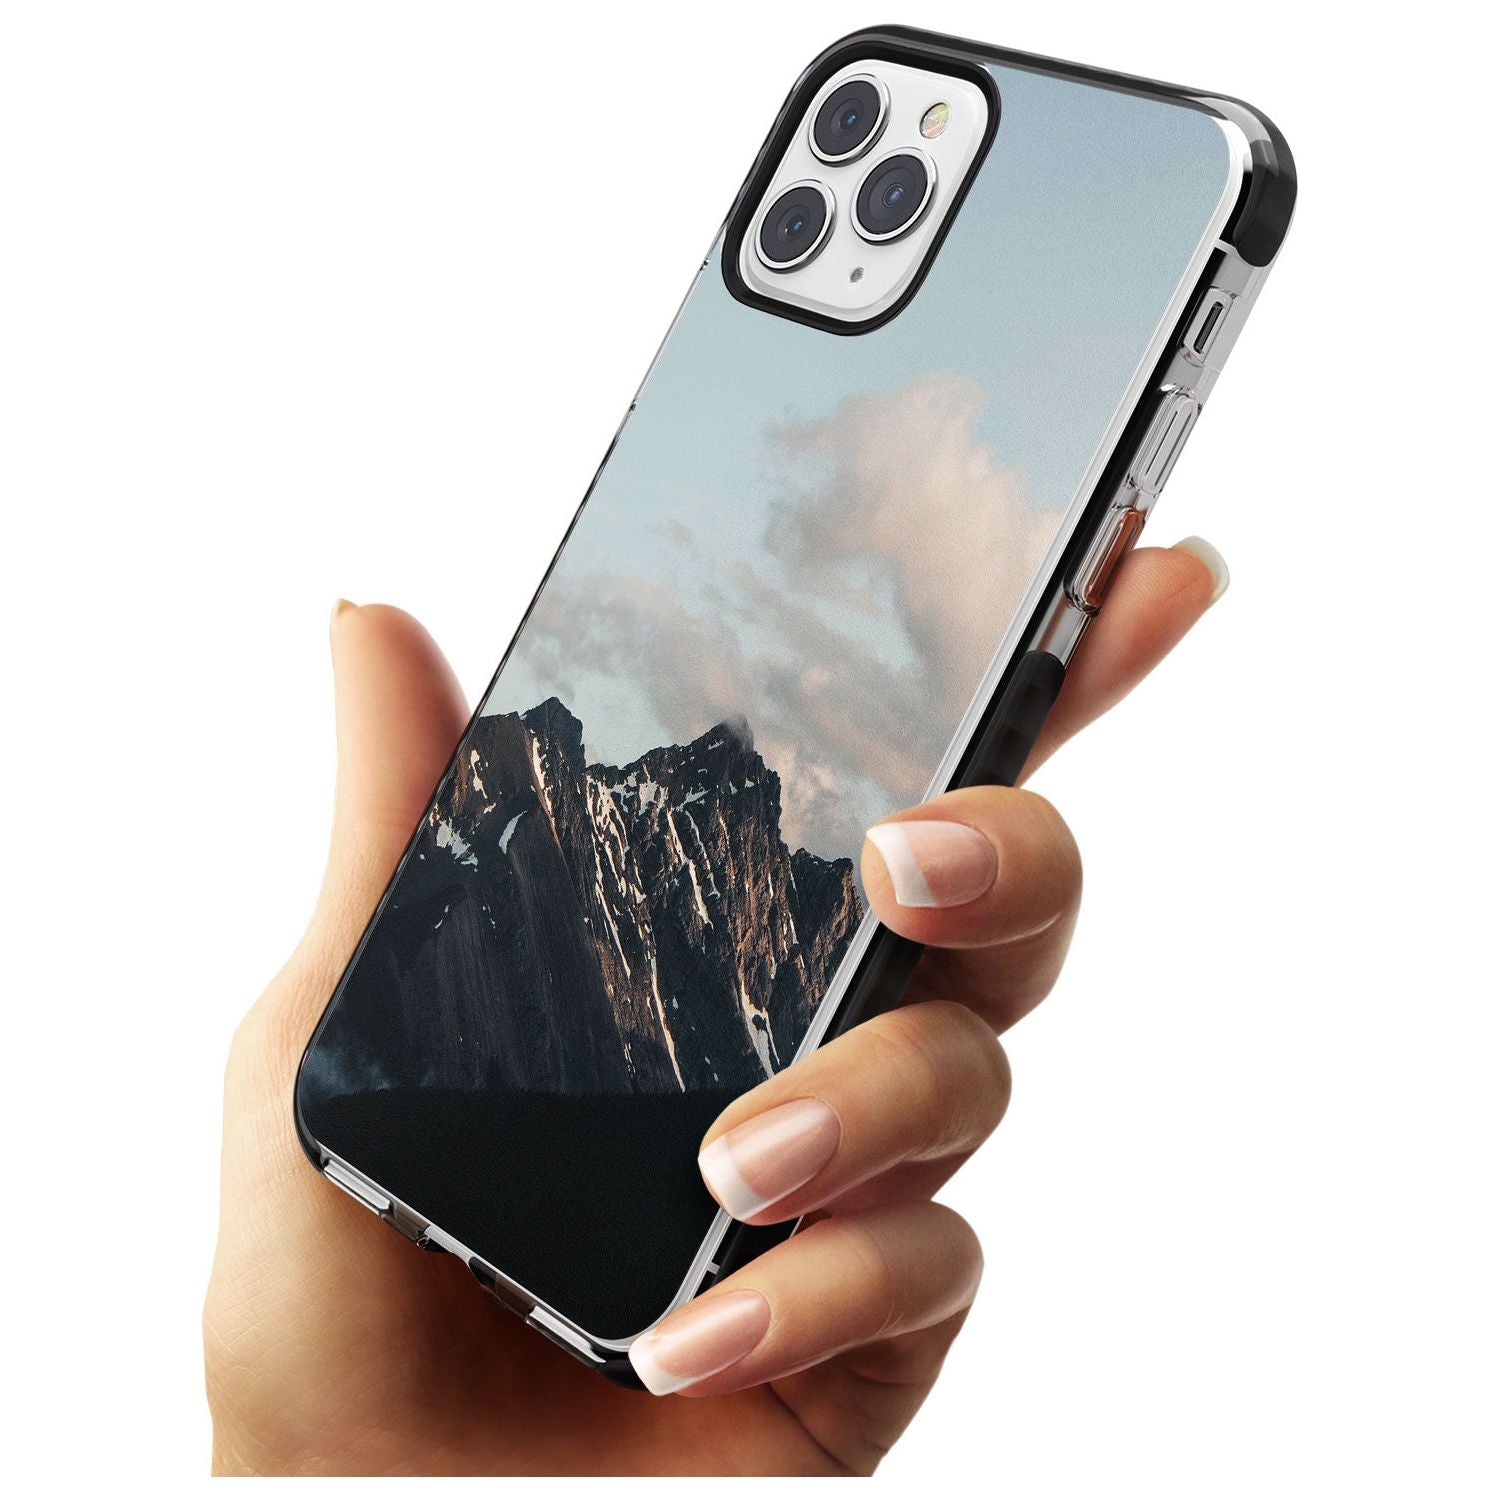 Mountain Range Photograph Black Impact Phone Case for iPhone 11 Pro Max